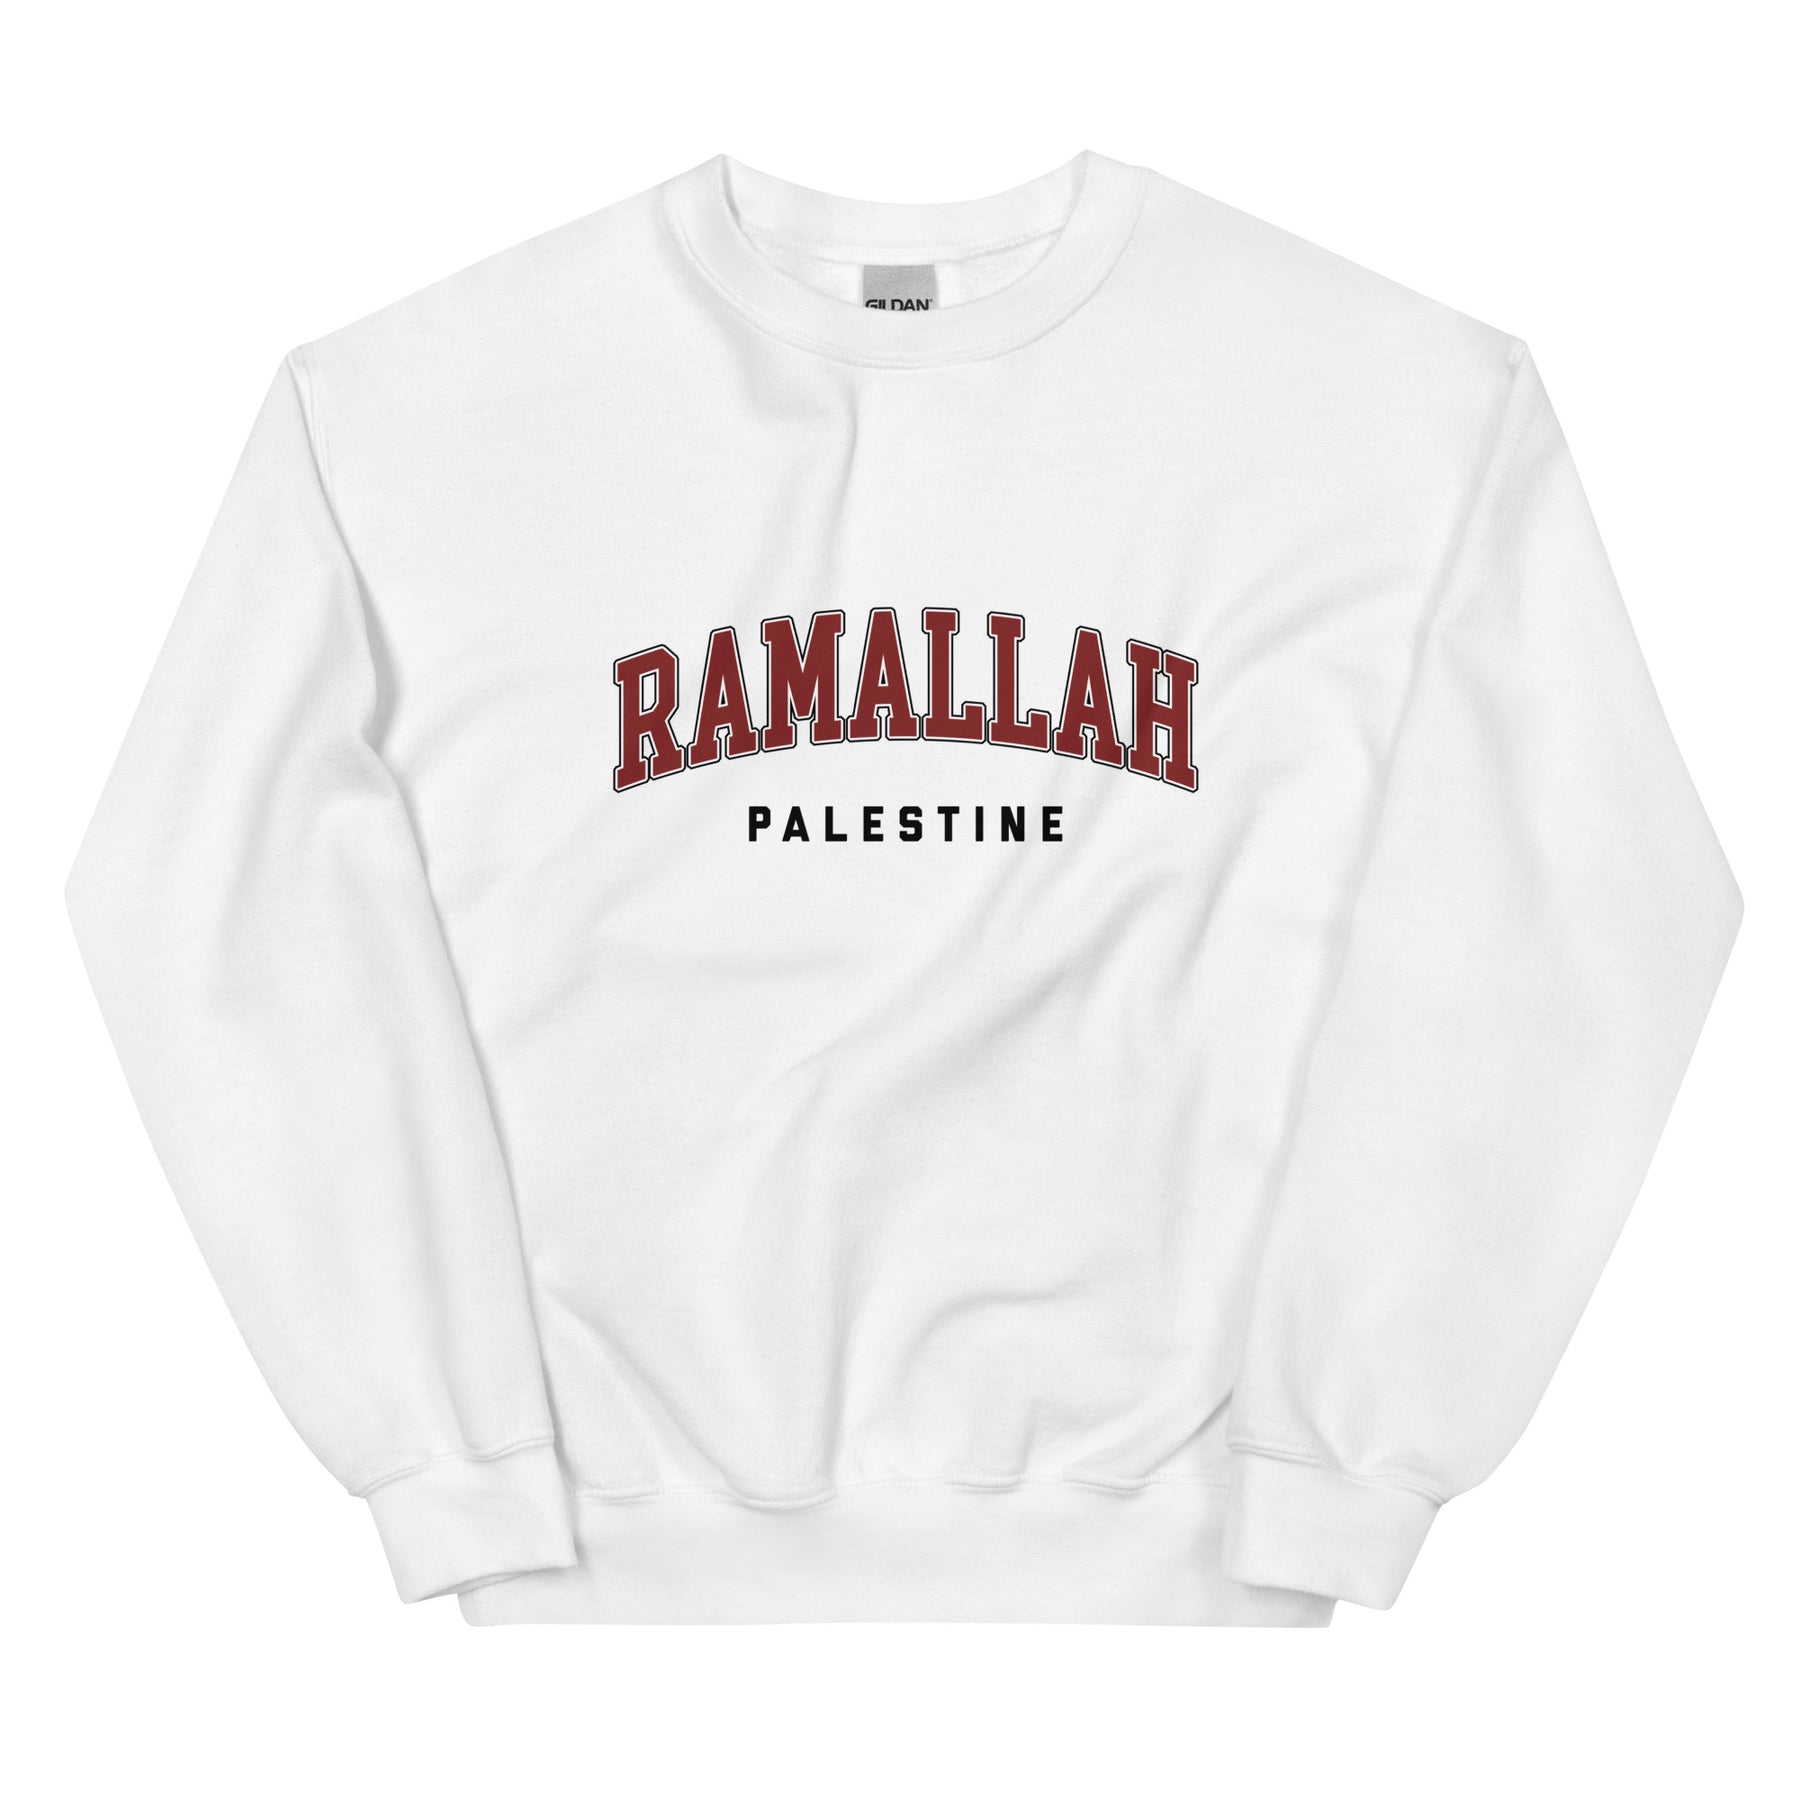 Ramallah, Palestine - Sweatshirt